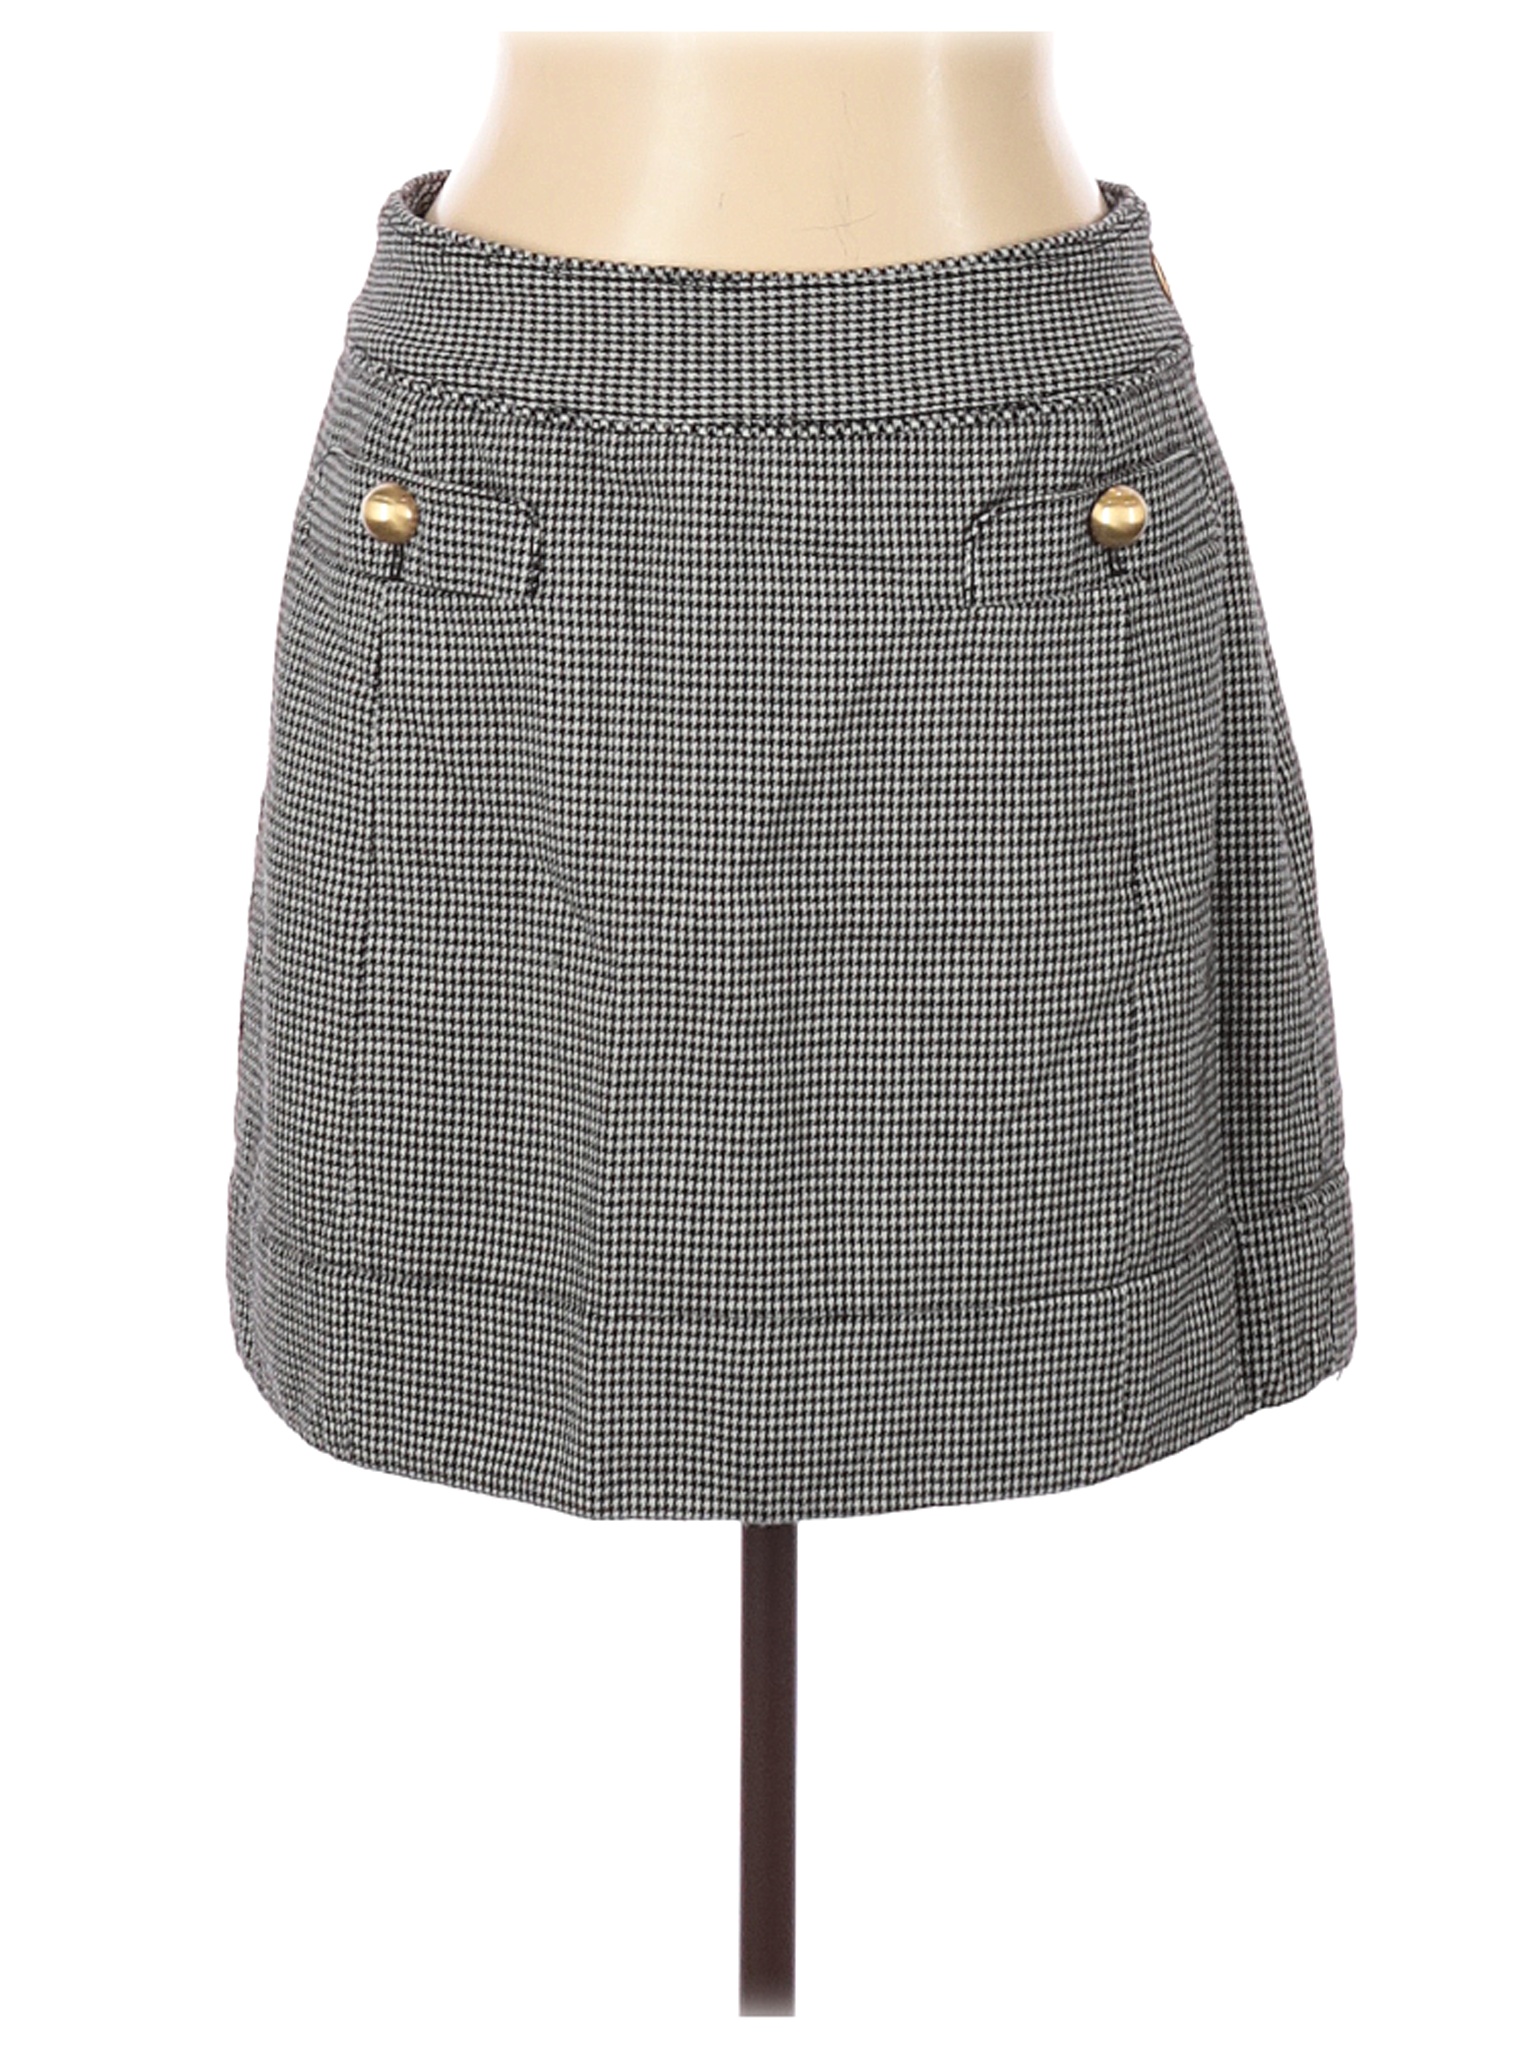 Juicy Couture Women Gray Wool Skirt 10 | eBay